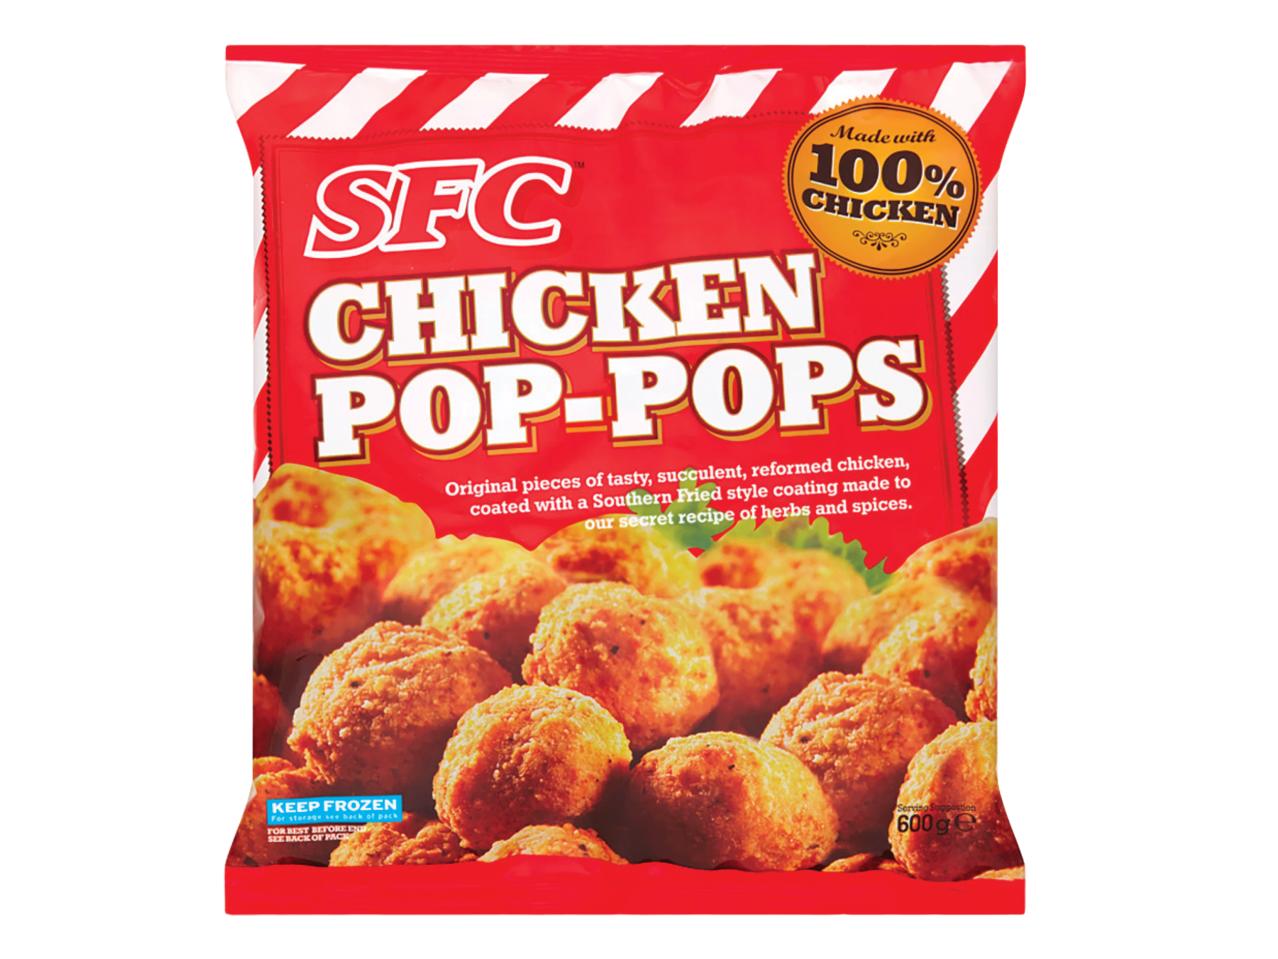 SFC Chicken Pop-Pops